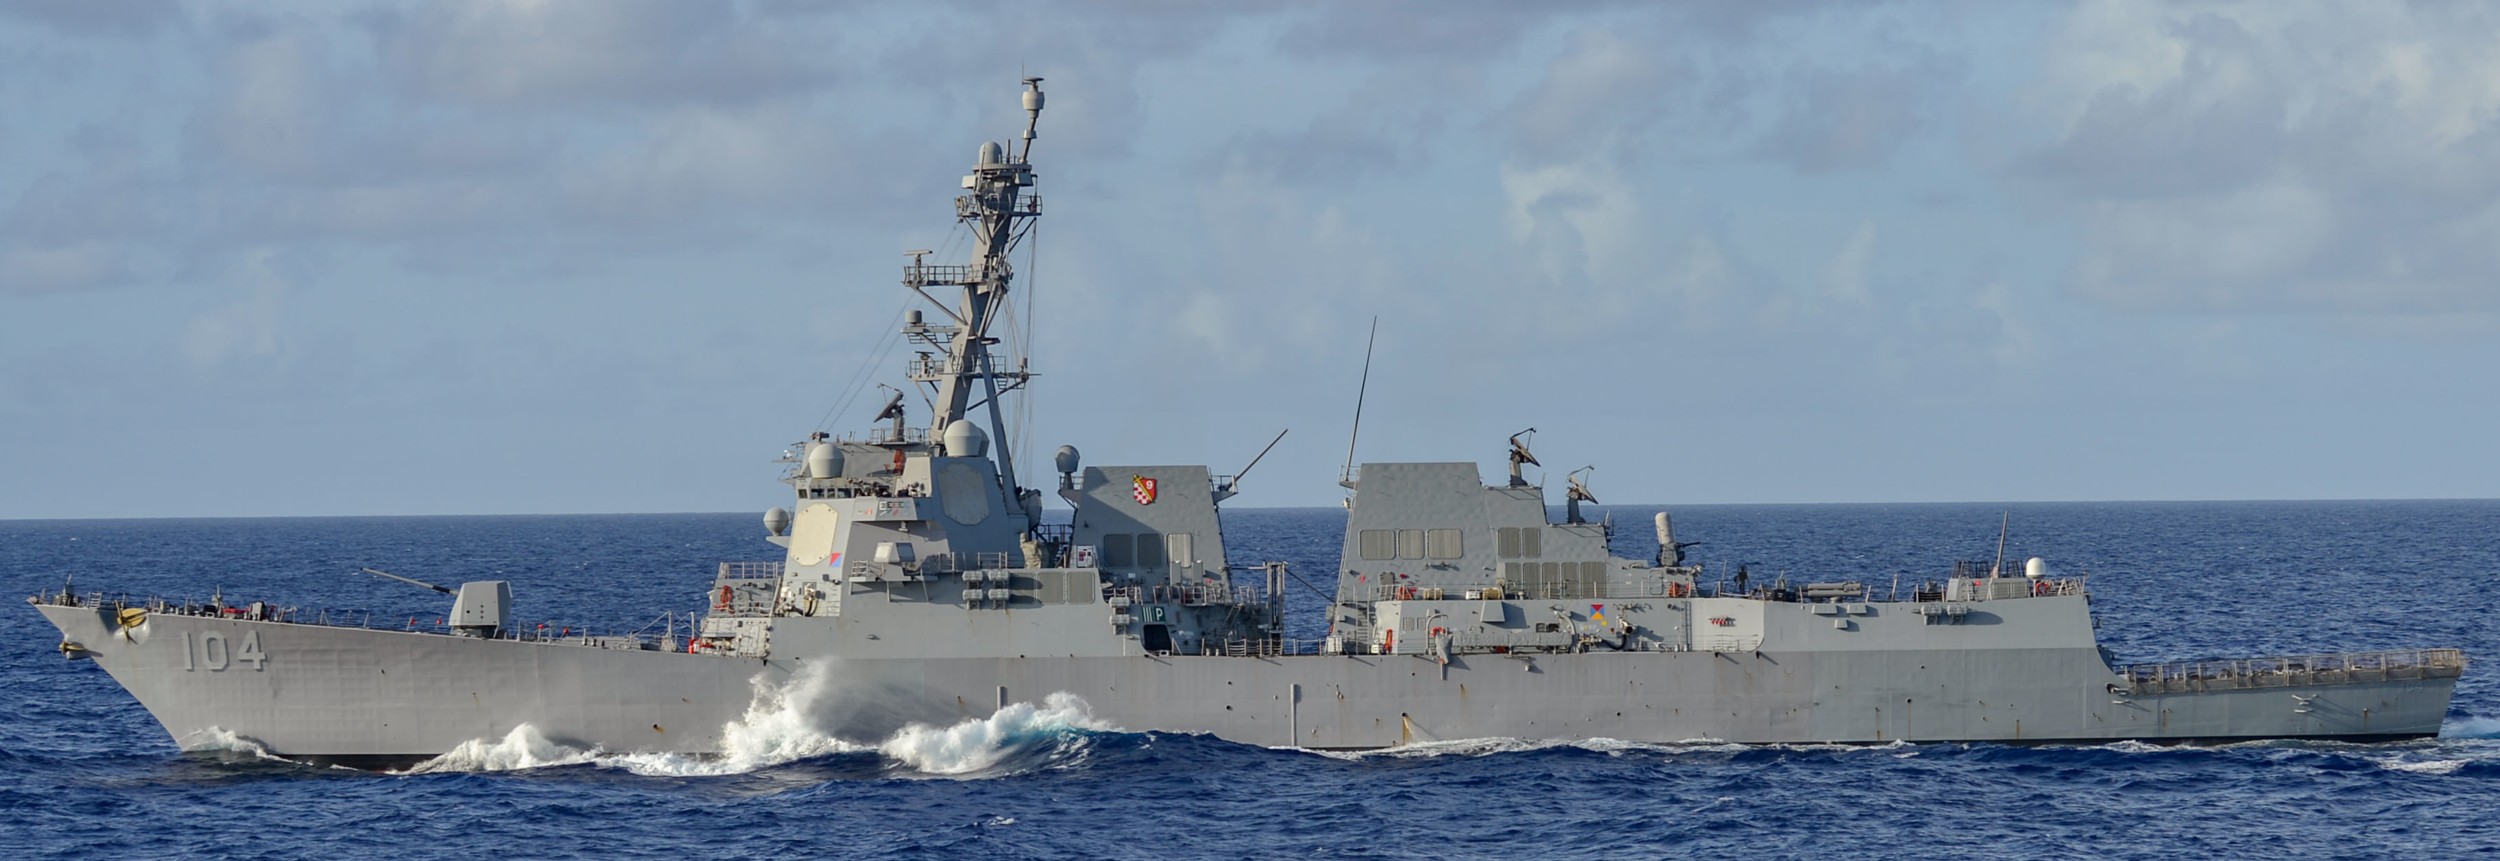 ddg-104 uss sterett arleigh burke class guided missile destroyer aegis us navy philippine sea 67